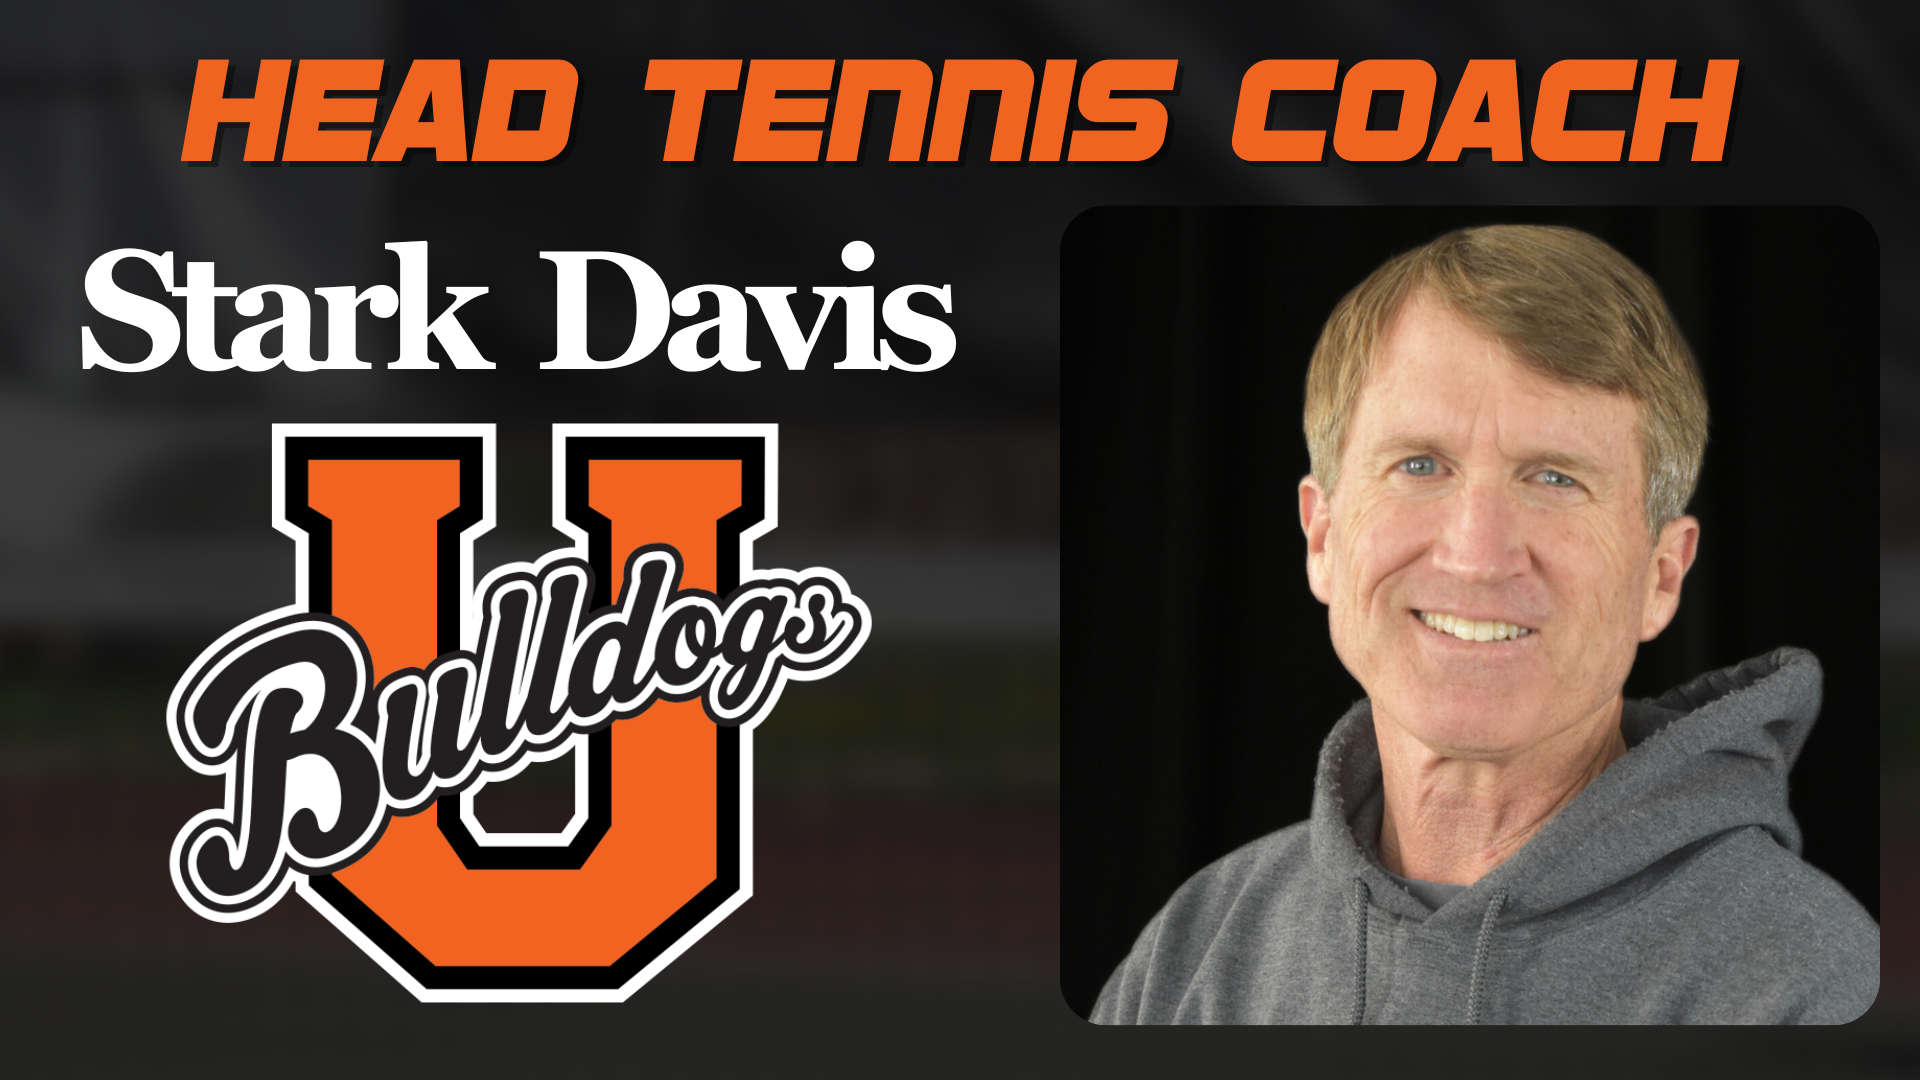 Stark Davis named head tennis coach at Union